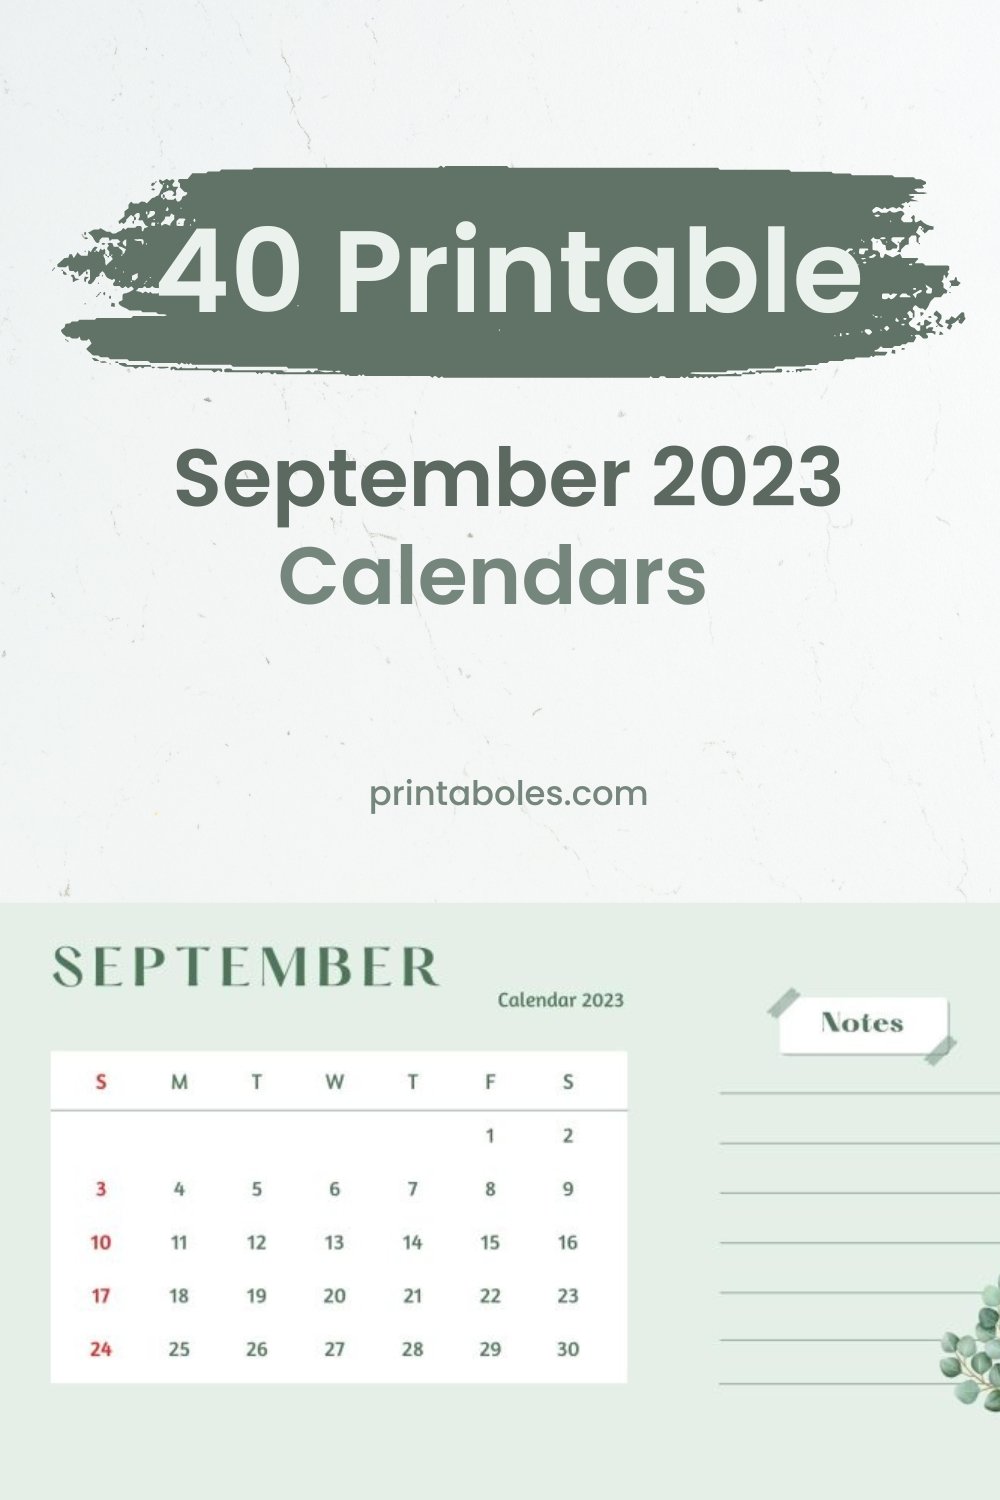 40 September 2023 Printable Calendars